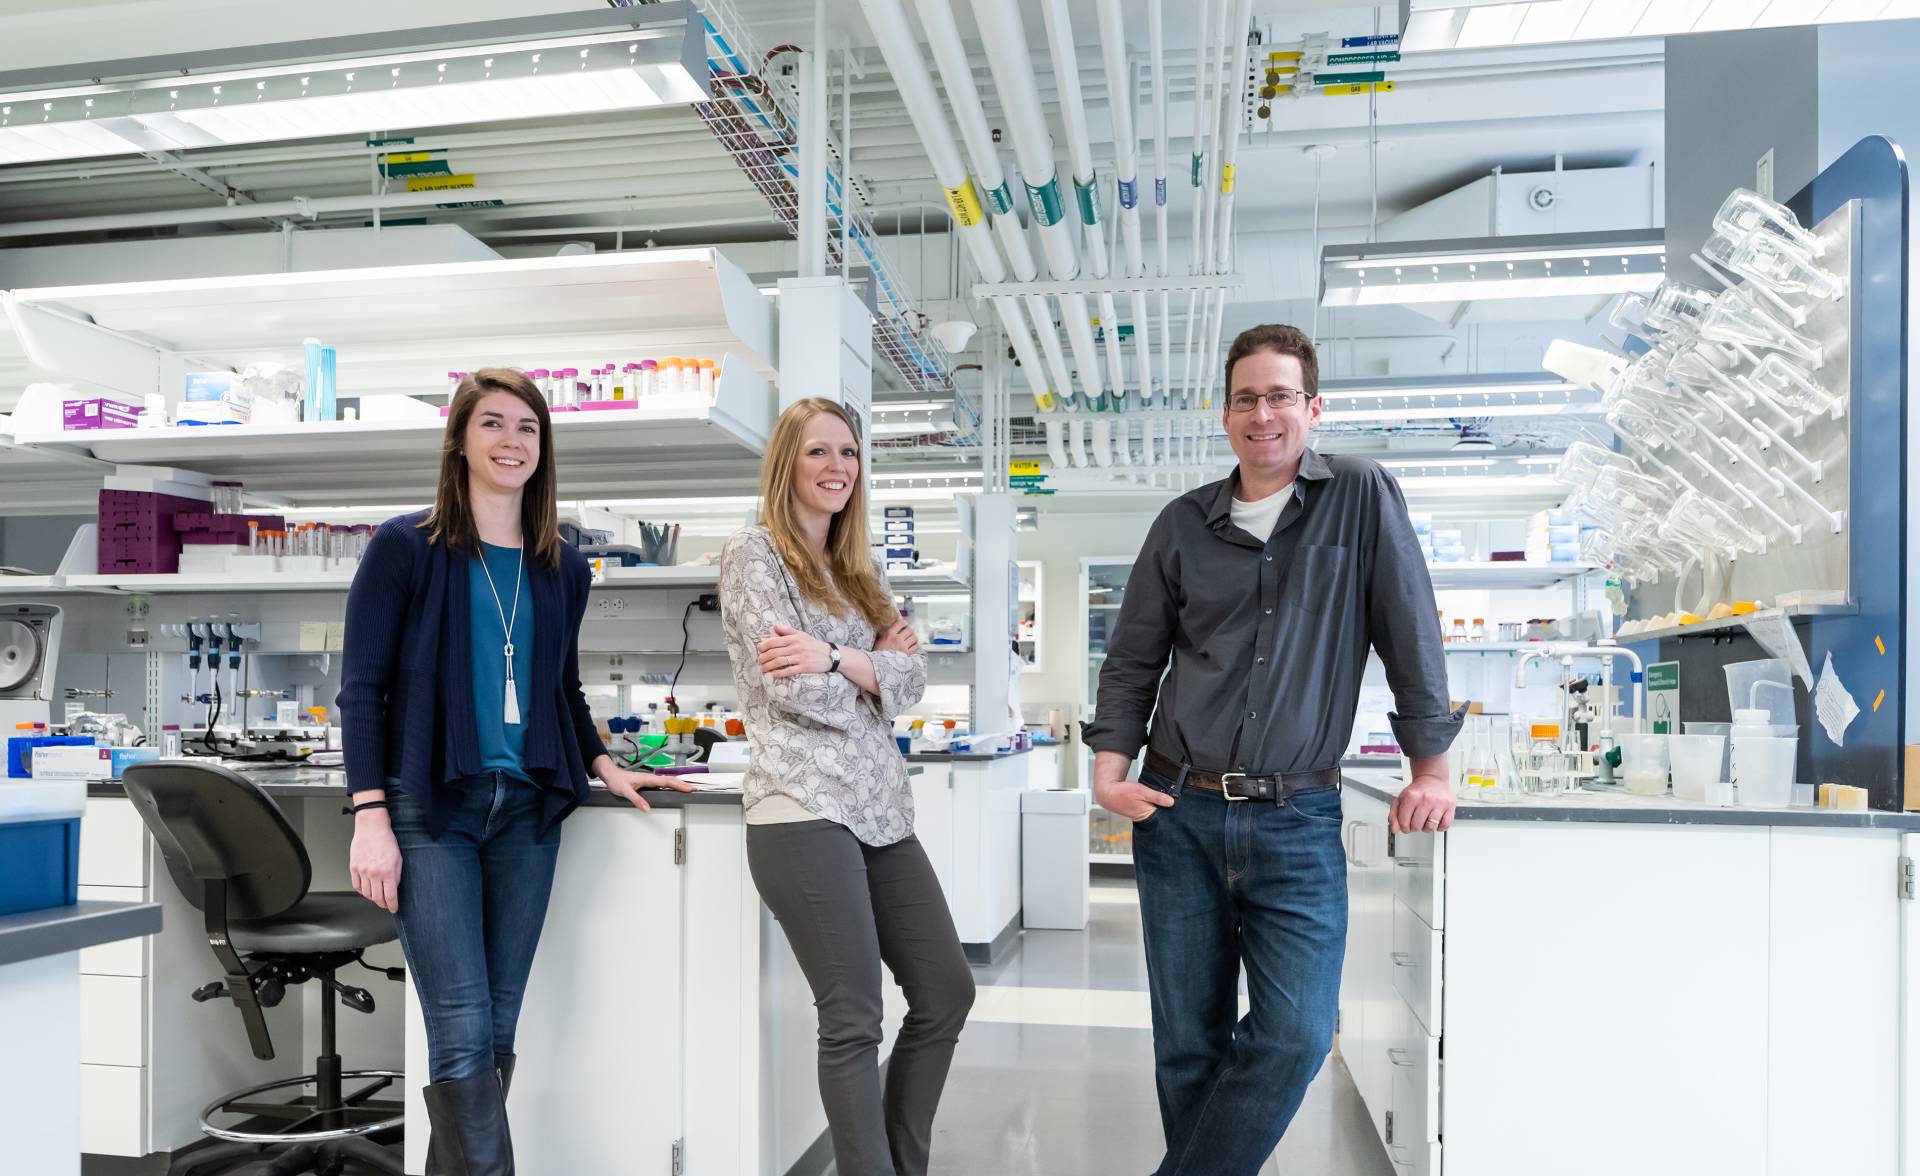 Allison Murawski, Theresa Barrett  and Mark Brynildsen standing in a lab